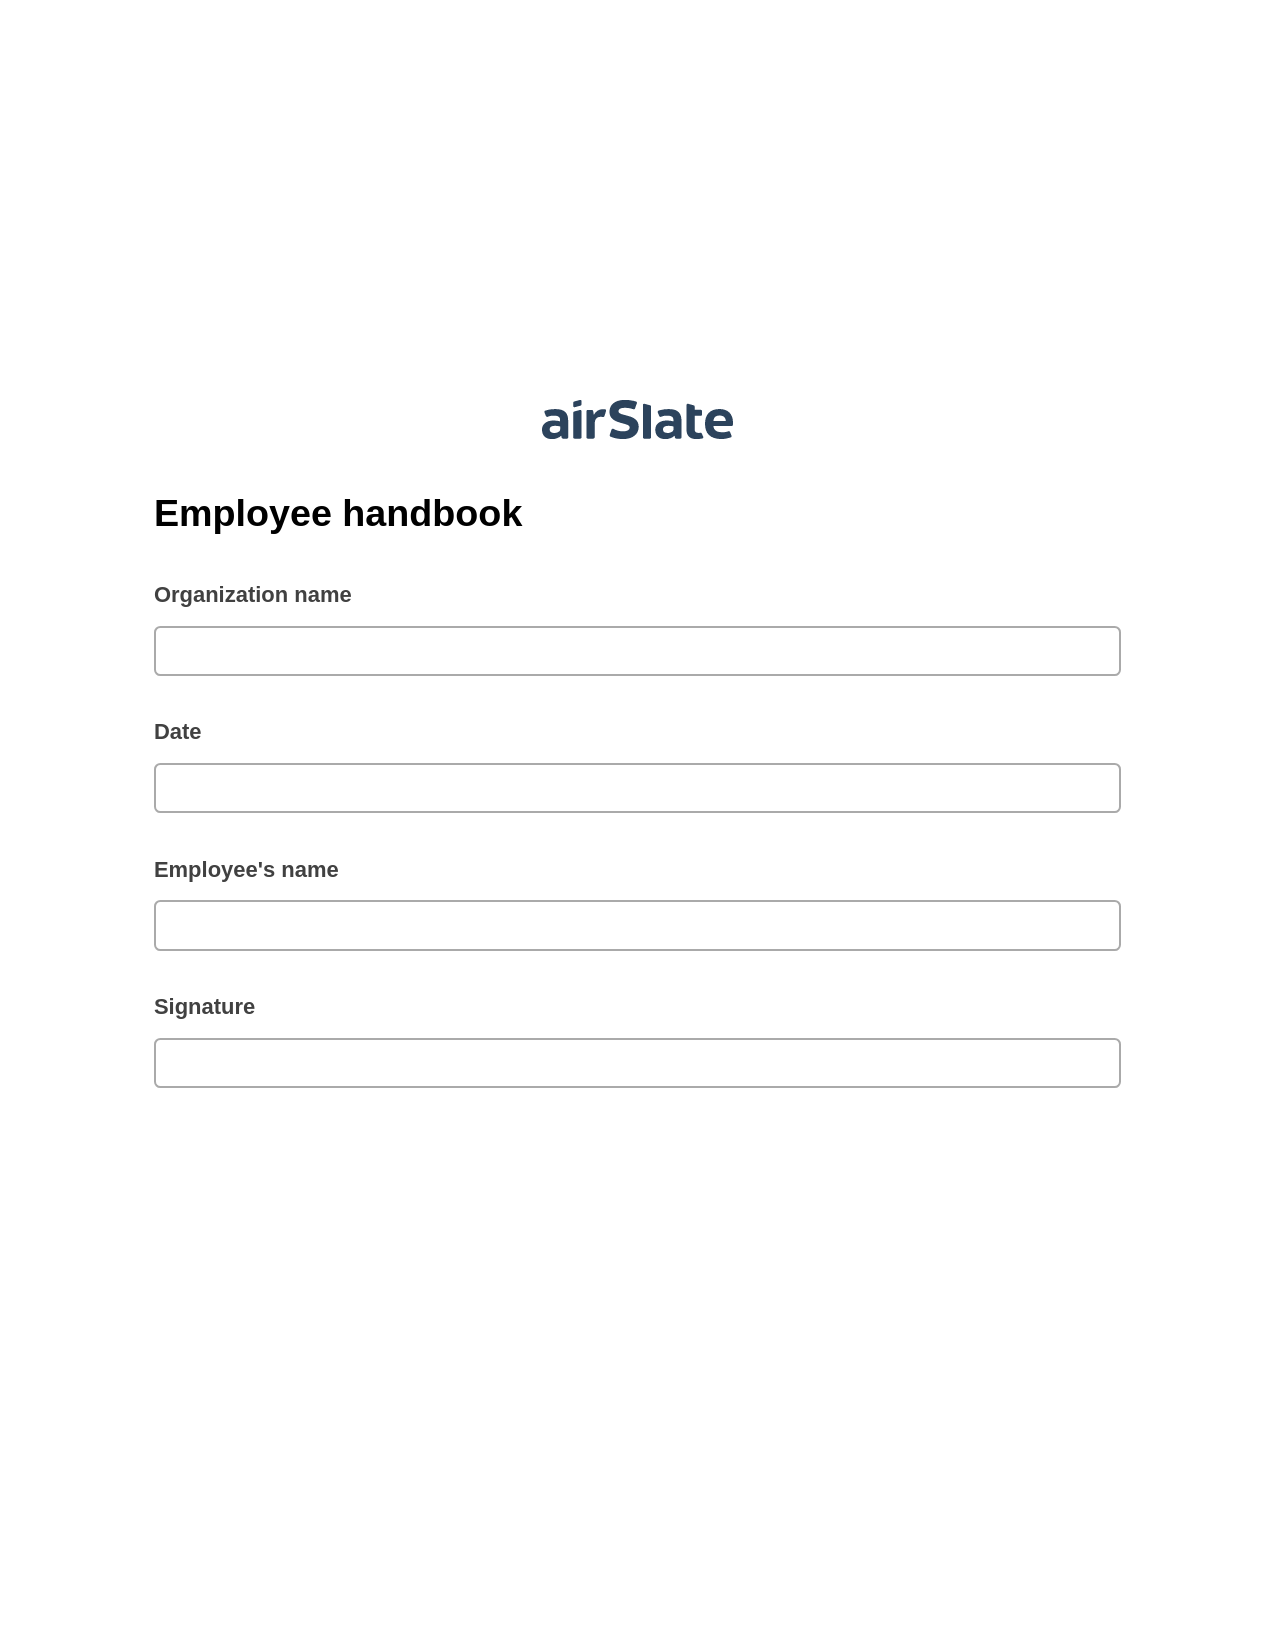 Multirole Employee handbook Pre-fill from Excel Spreadsheet Bot, Create QuickBooks invoice Bot, Email Notification Postfinish Bot